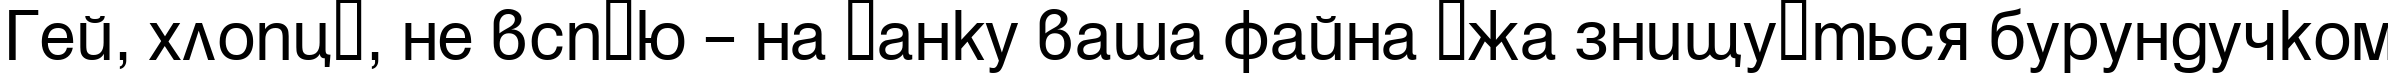 Пример написания шрифтом Hemus текста на украинском